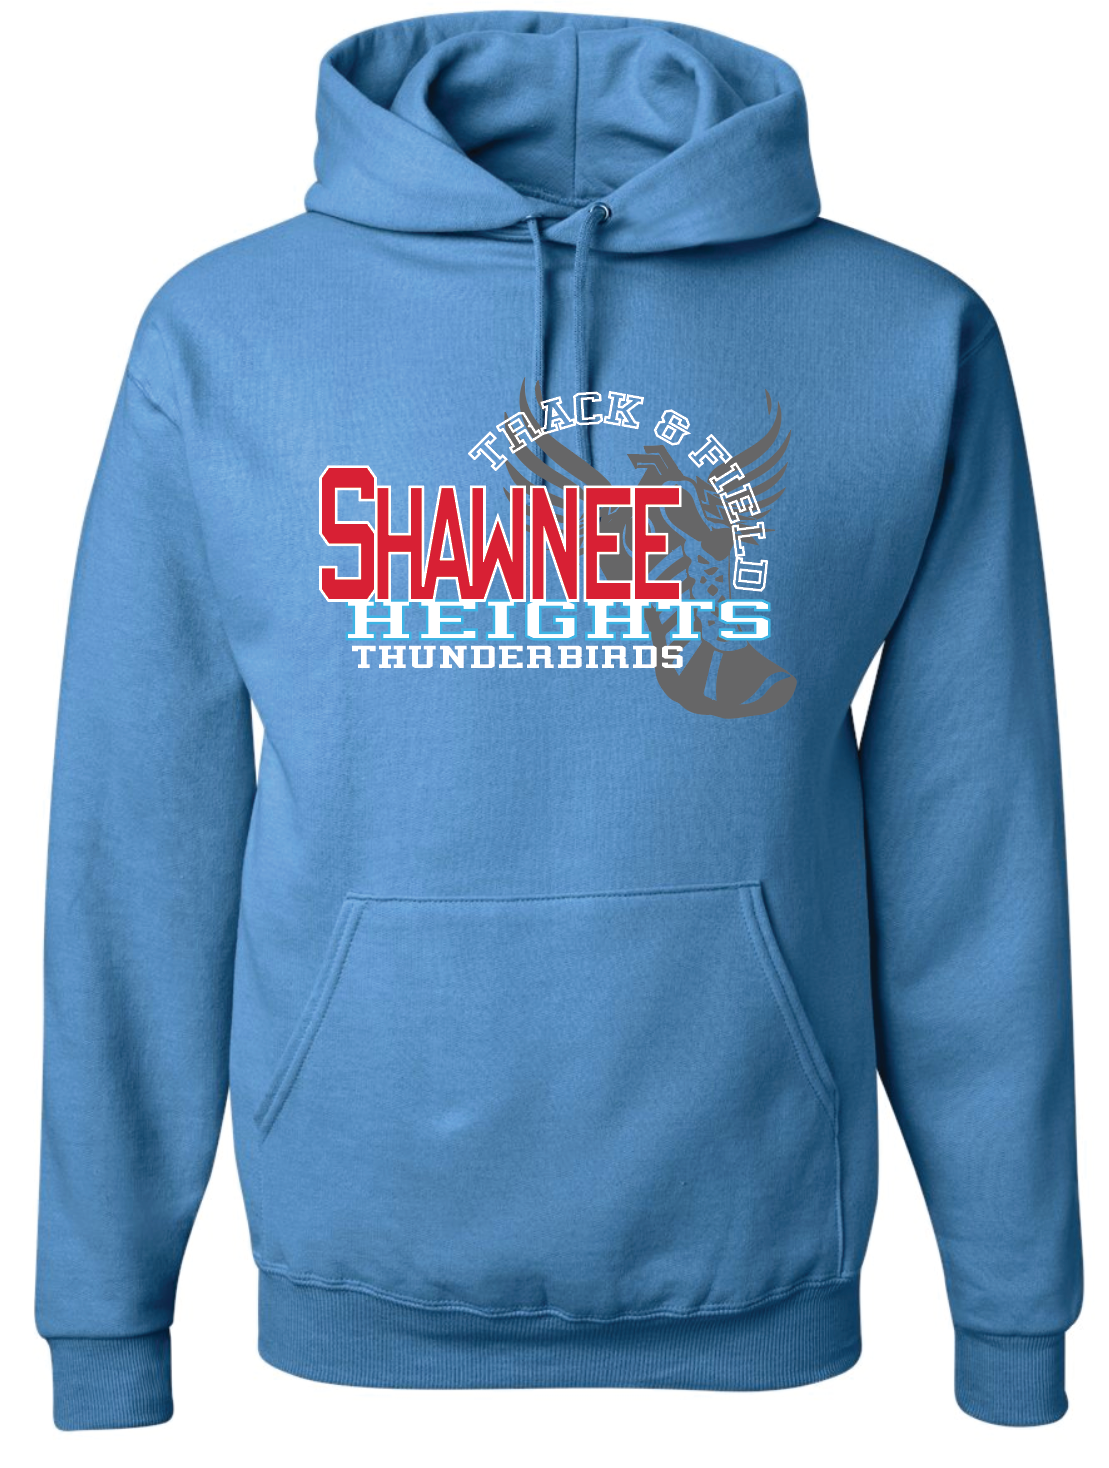 Shawnee Heights Track & Field Jerzees NuBlend® Hooded Sweatshirt